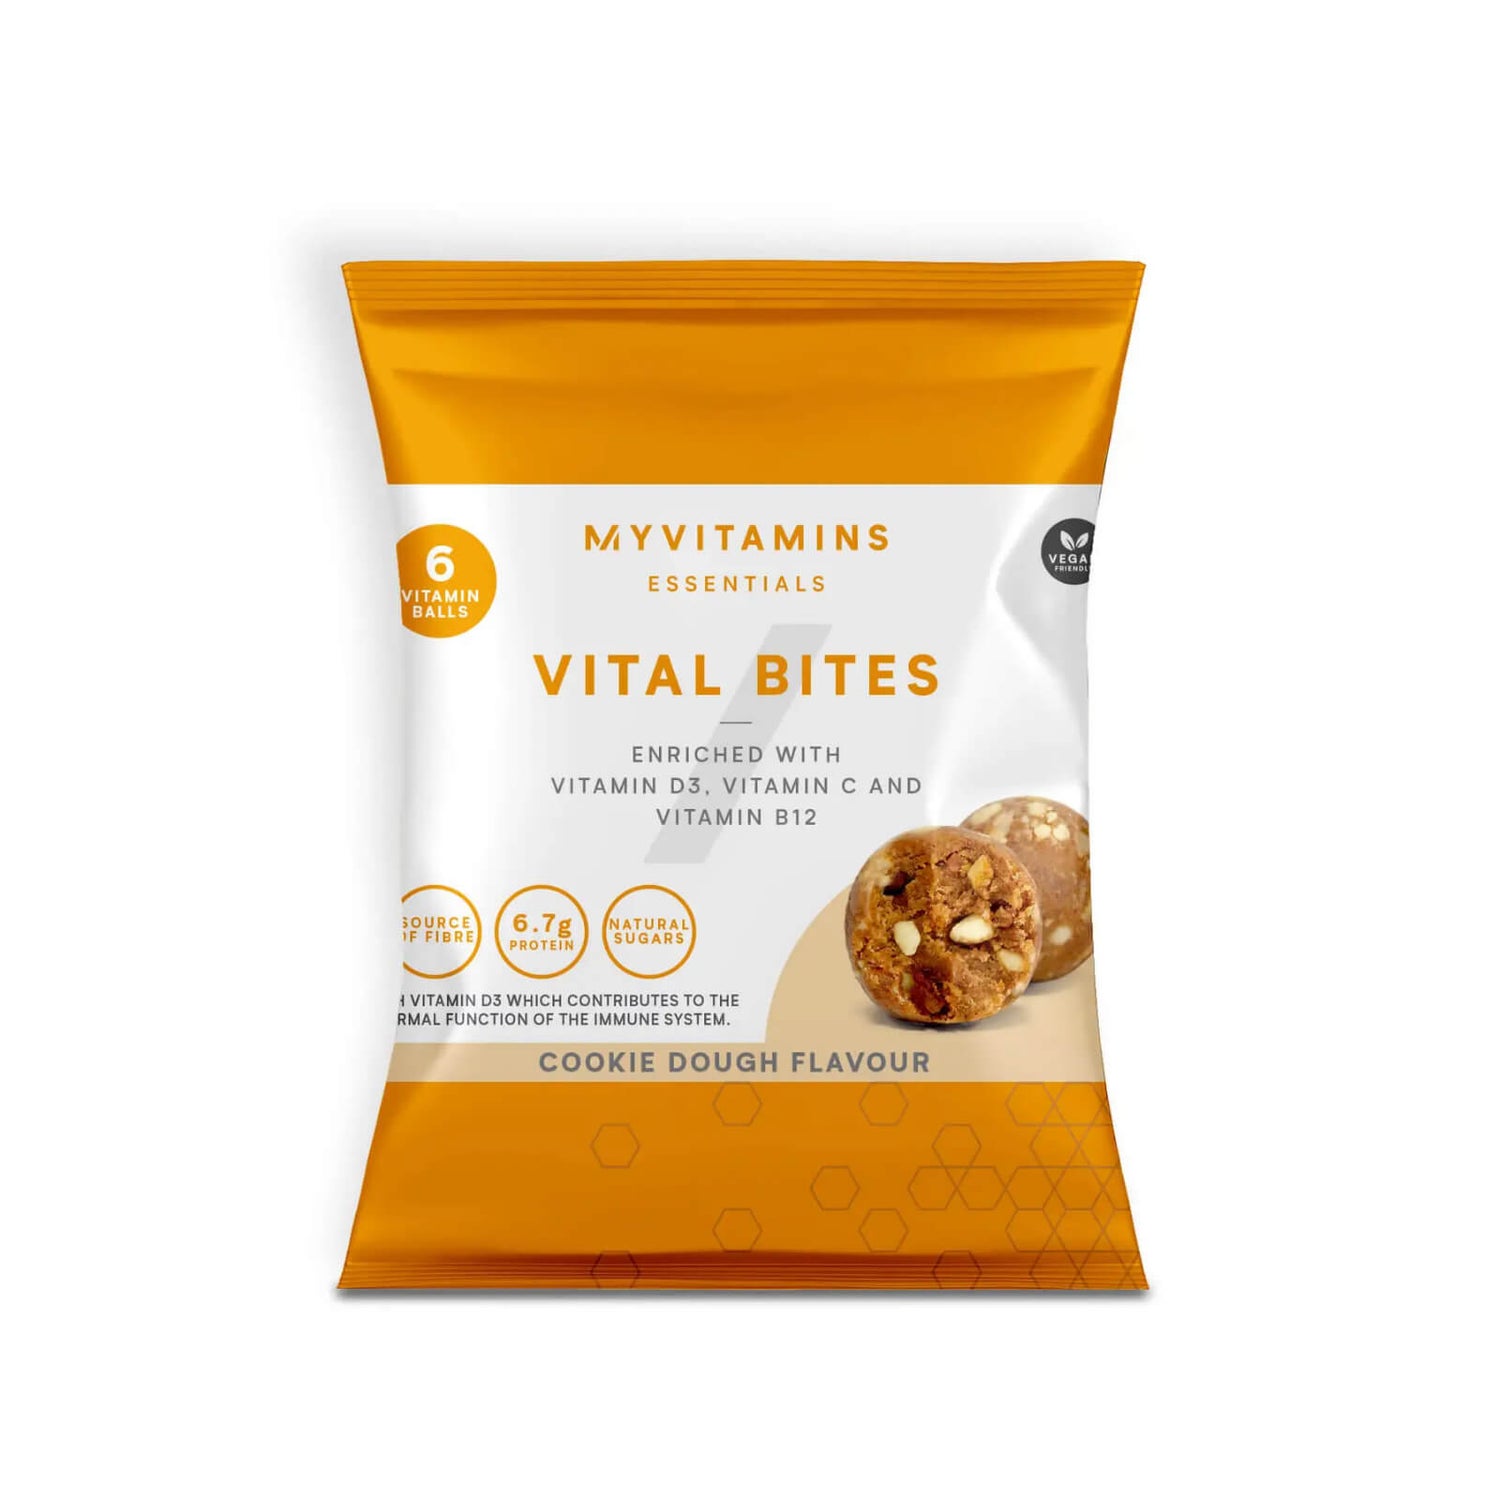 Myvitamins Vital Bites (Sample) - 45g - Cookie Dough 